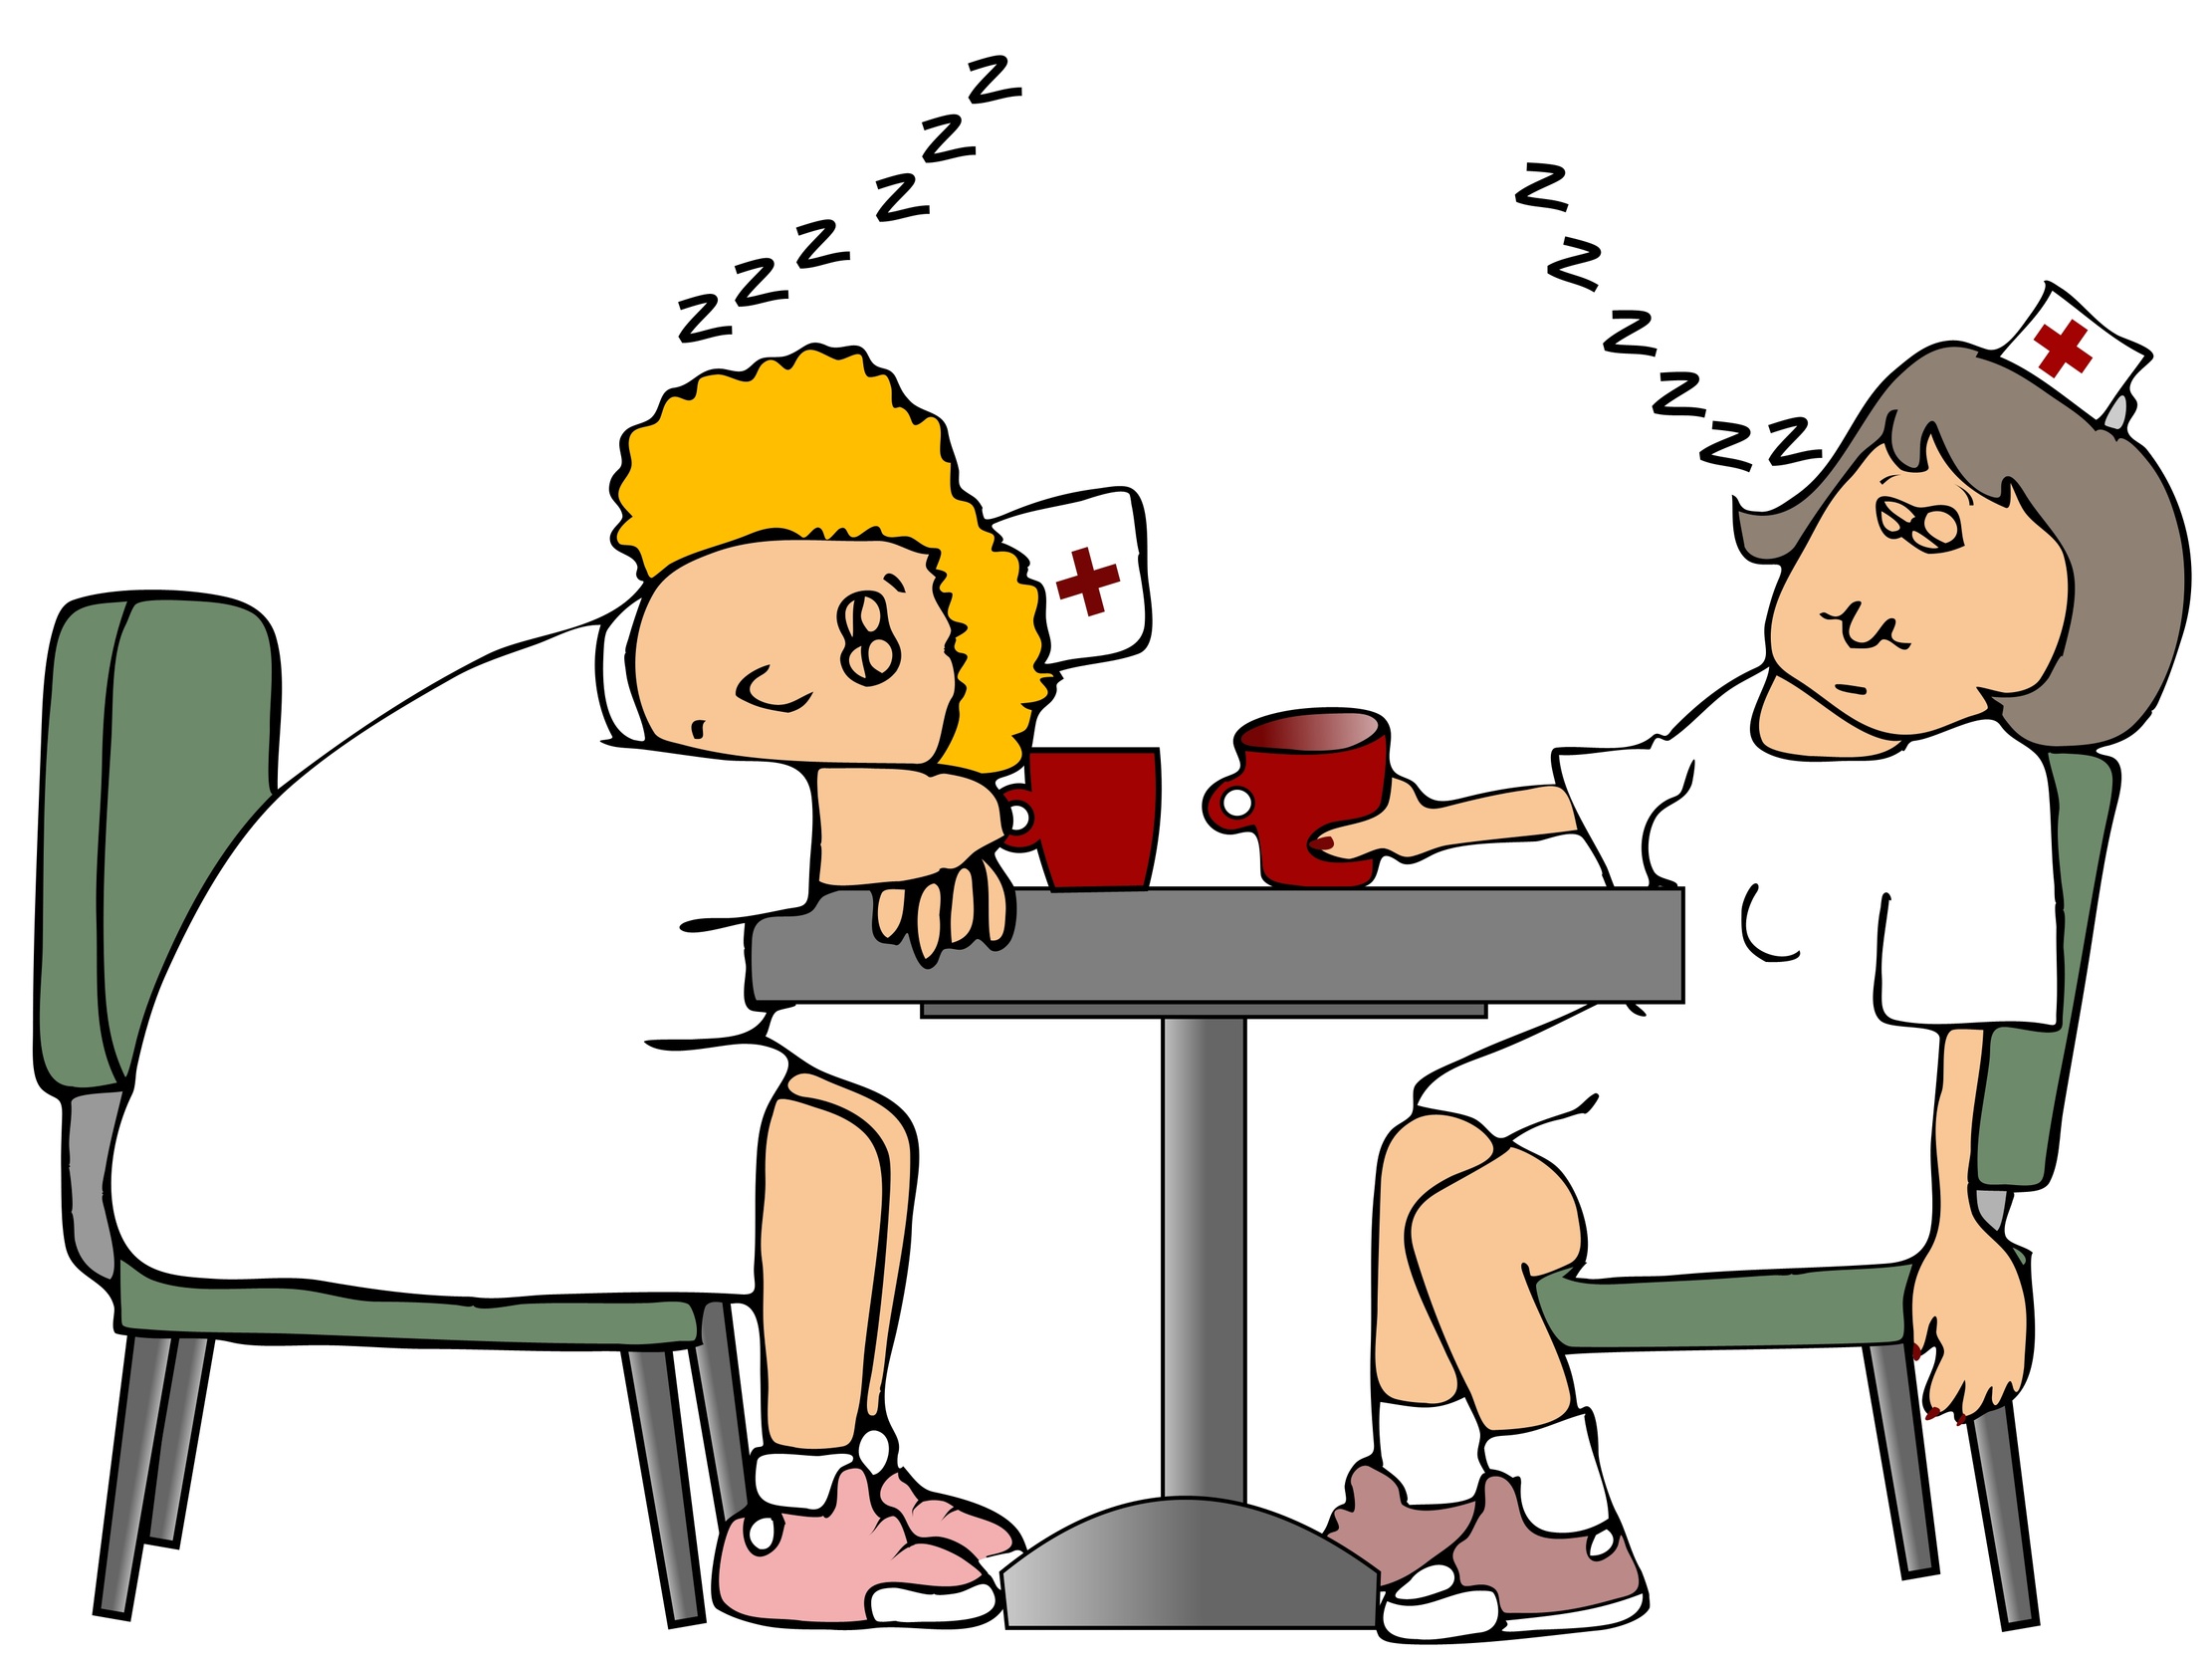 Cartoon Images Of Nurses - Cliparts.co